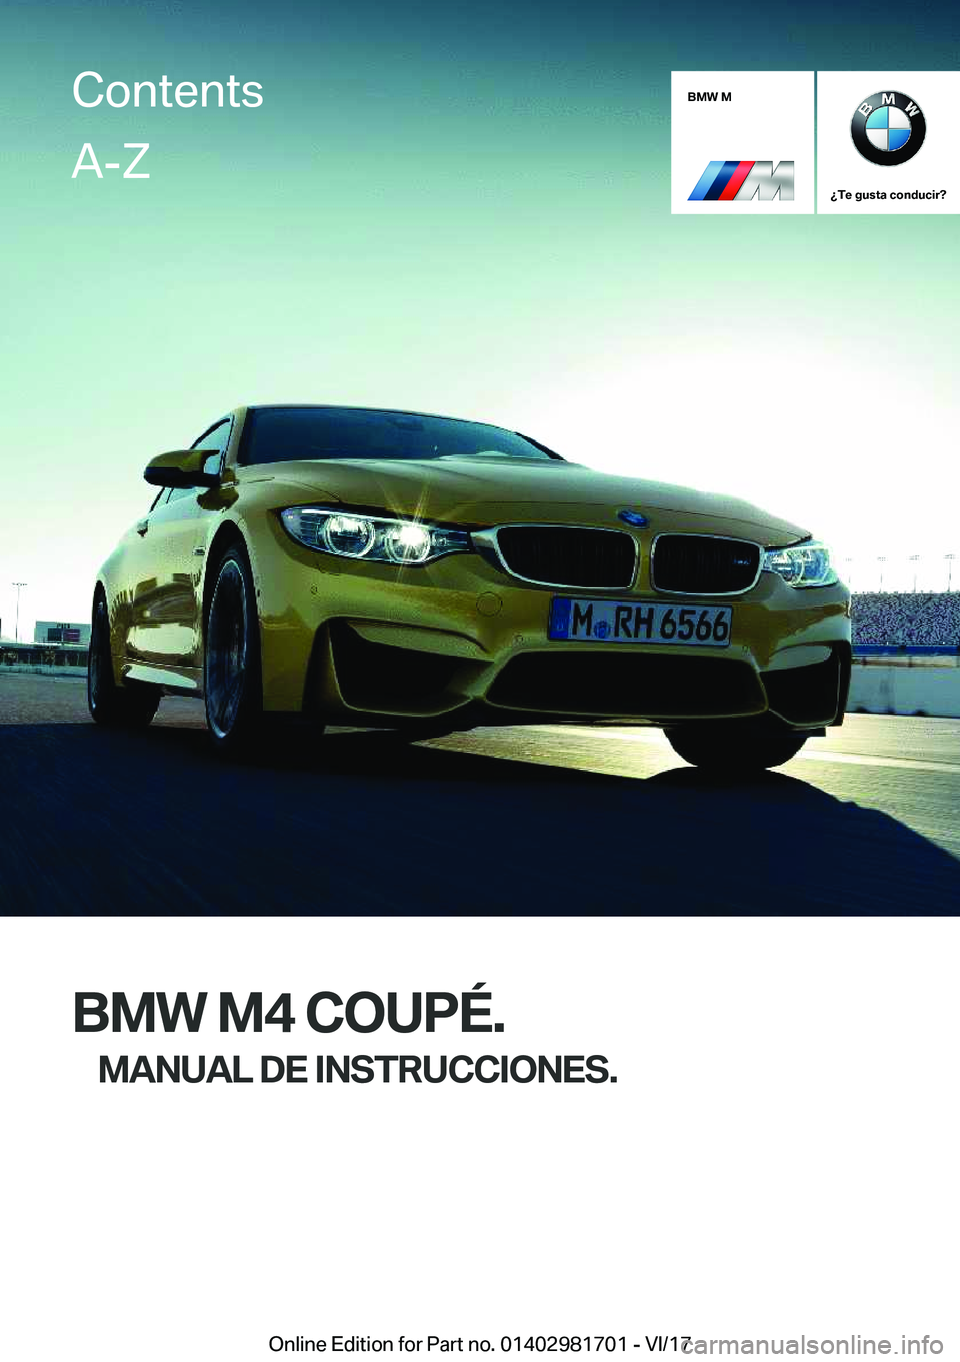 BMW M4 2018  Manuales de Empleo (in Spanish) �B�M�W��M
��T�e��g�u�s�t�a��c�o�n�d�u�c�i�r� 
�B�M�W��M�4��C�O�U�P�